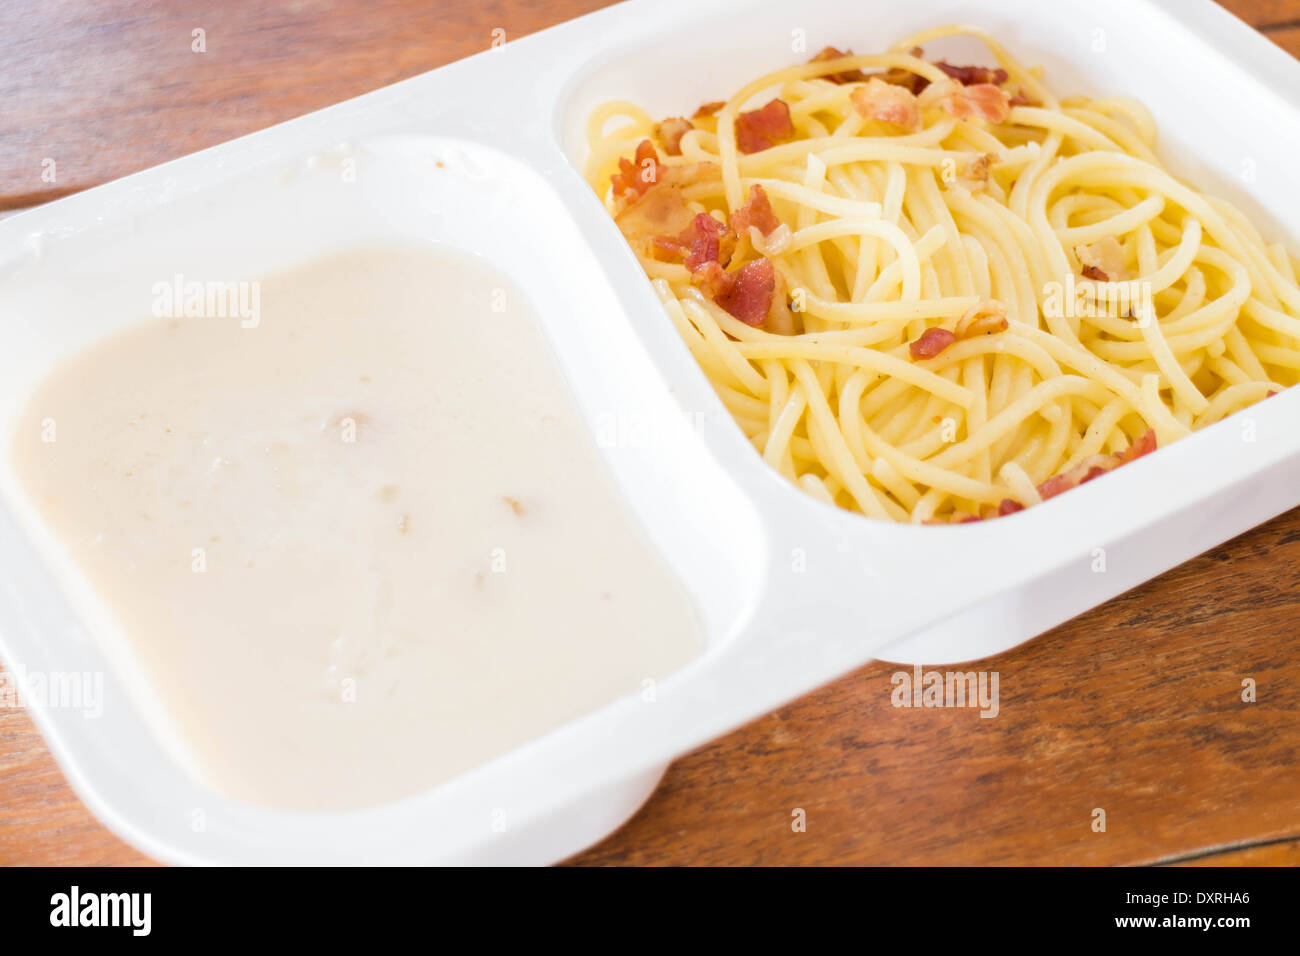 Fertiggerichte mit Spaghetti carbonara Stockfoto